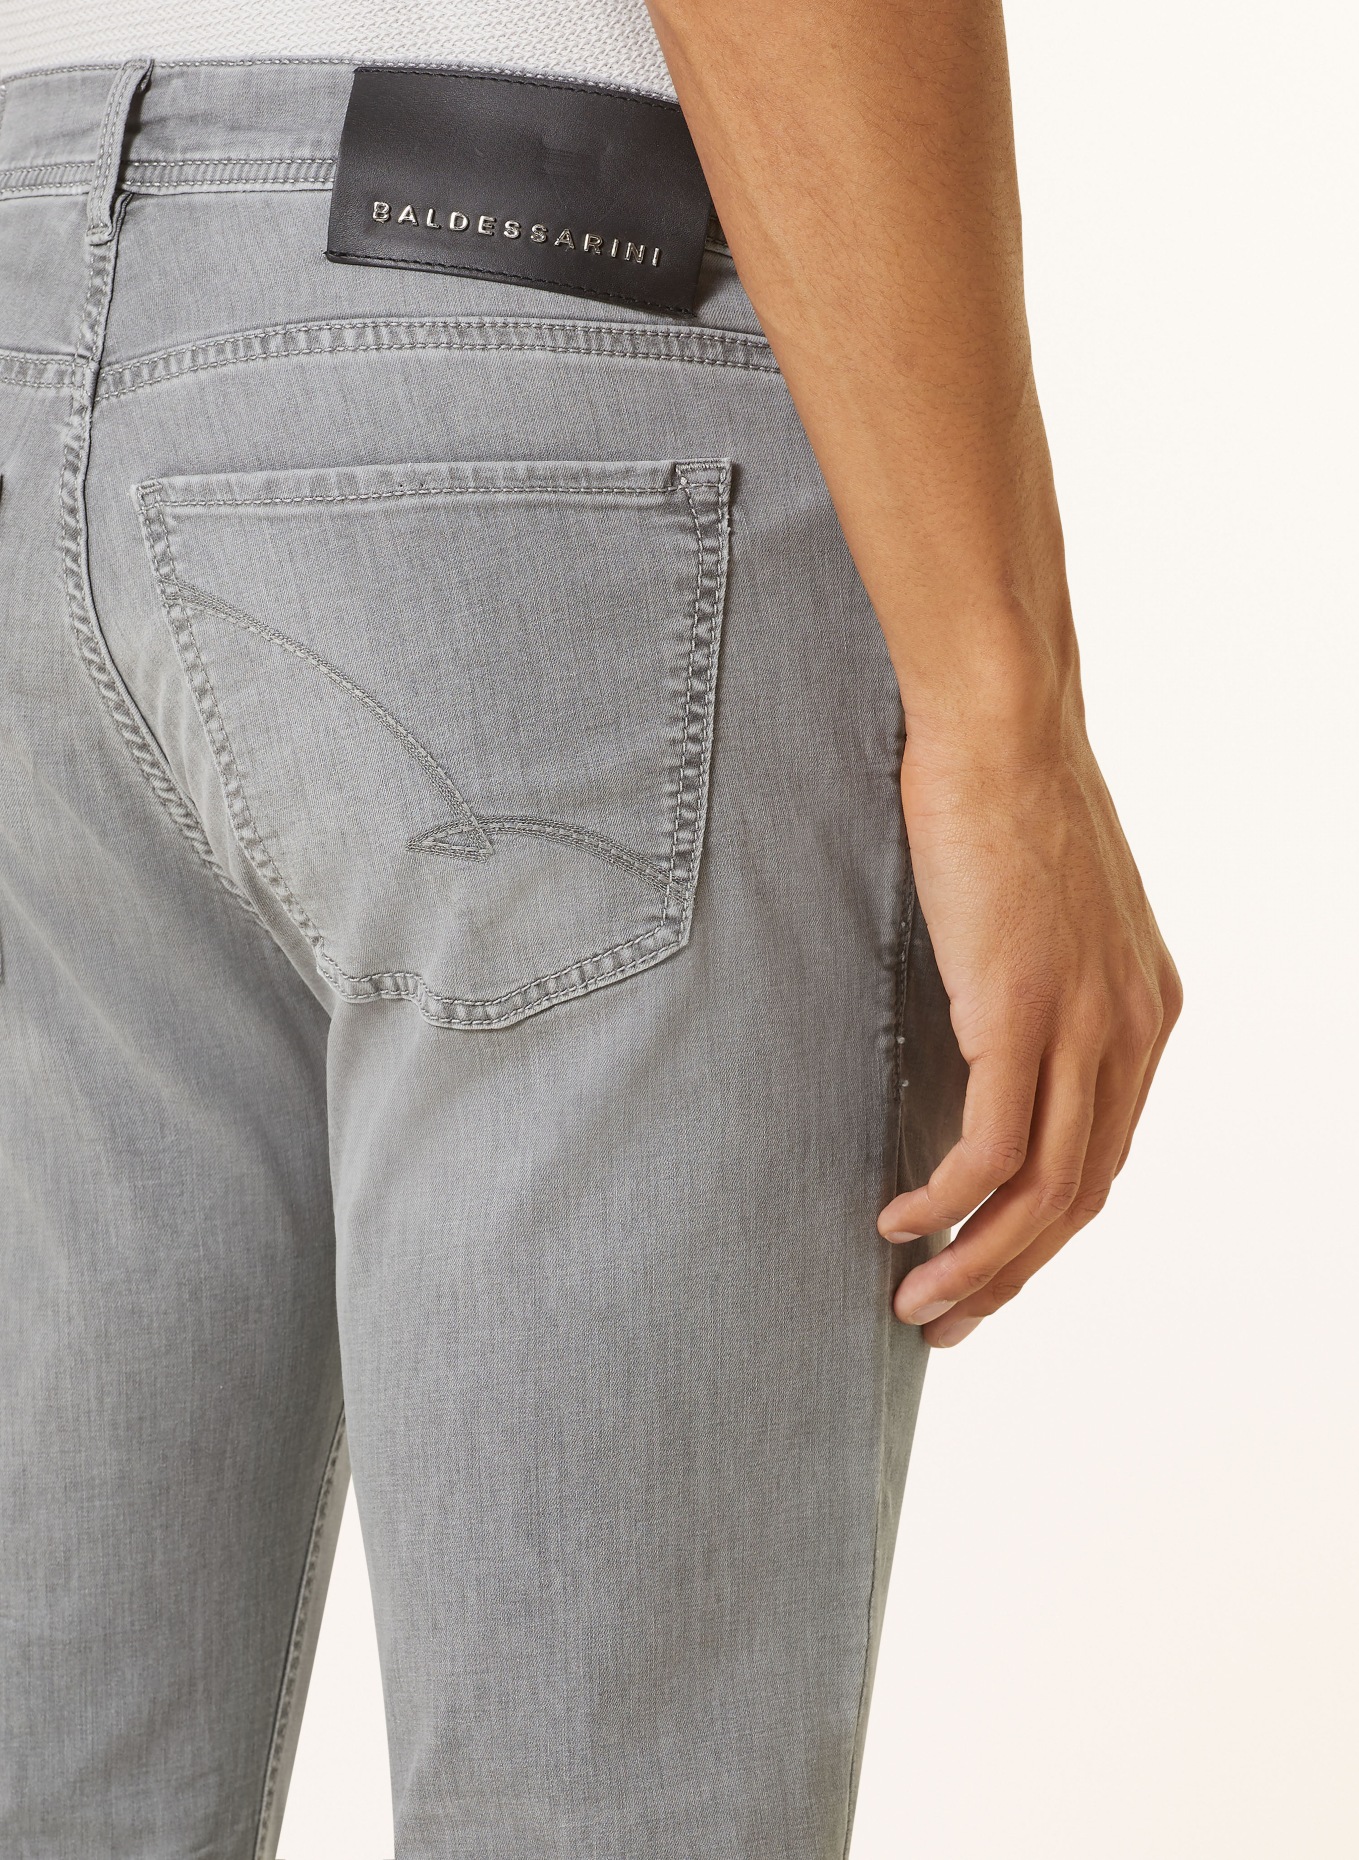 BALDESSARINI Jeans Regular Fit, Farbe: 9854 silver used buffies (Bild 6)